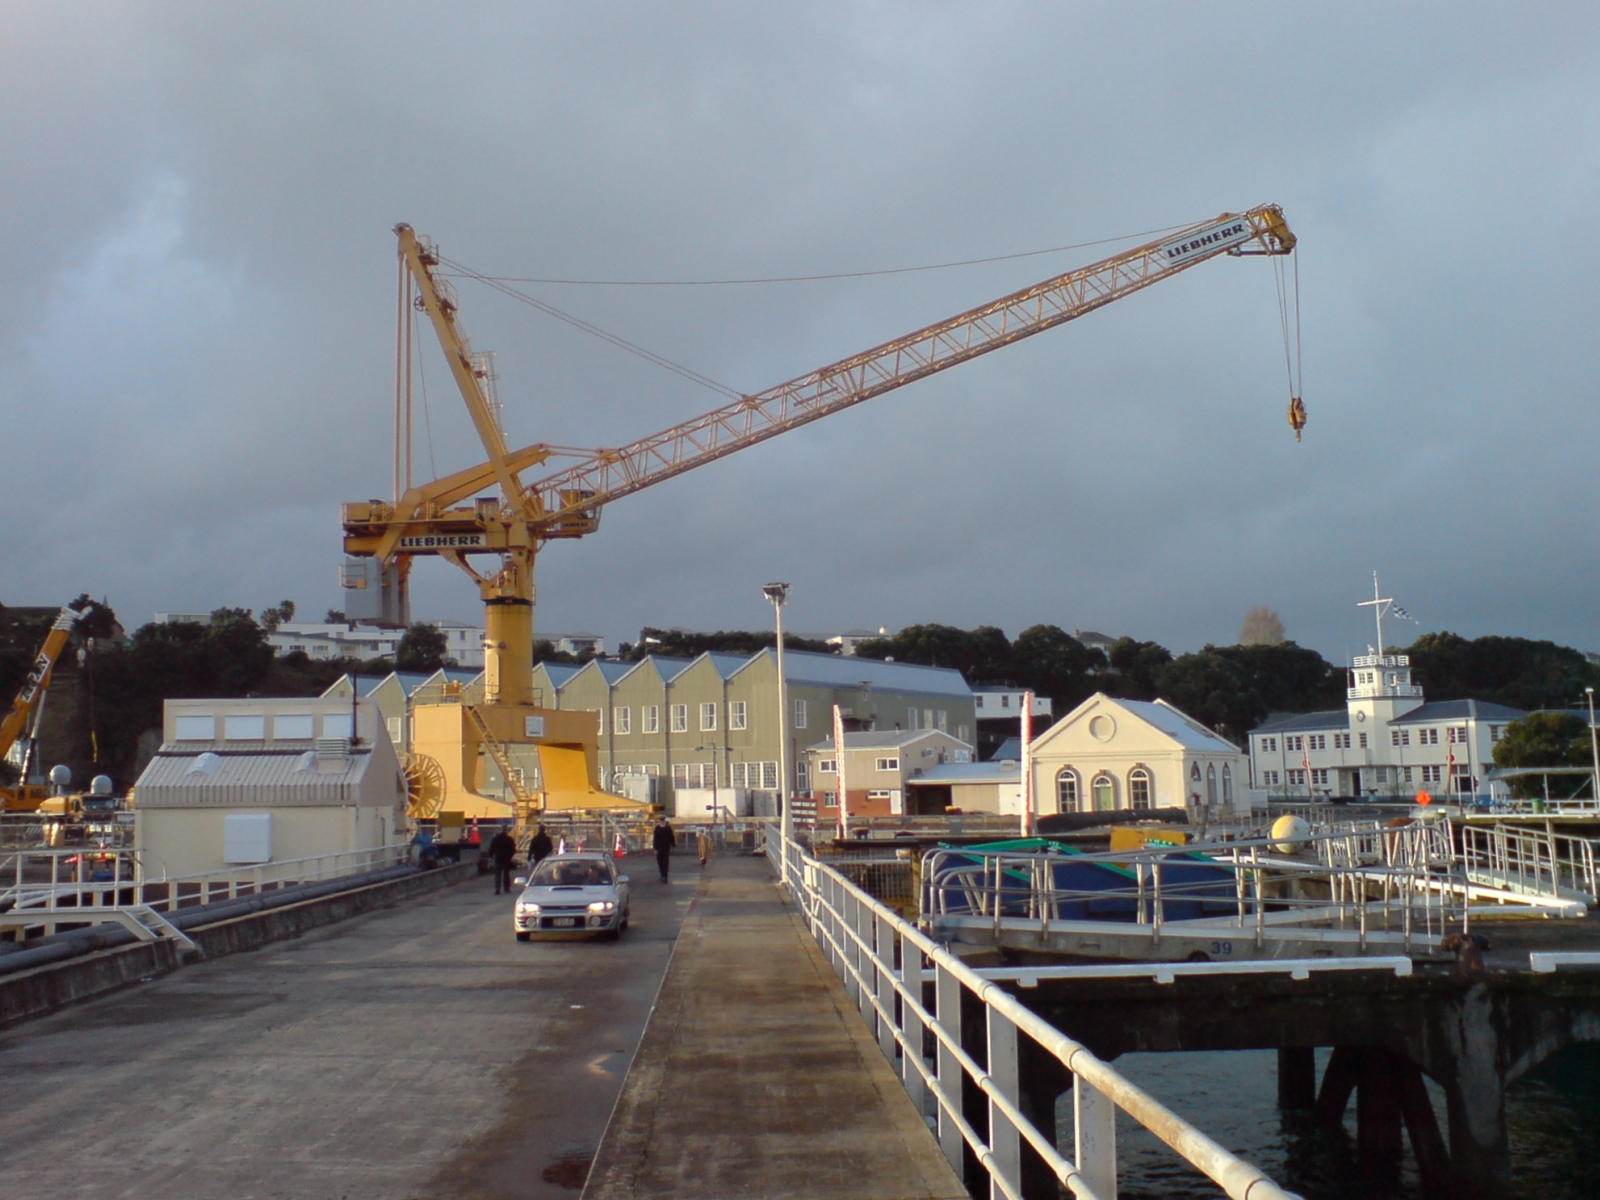 File:Devonport Naval Base Calliope's Crane.jpg - Wikimedia Commons